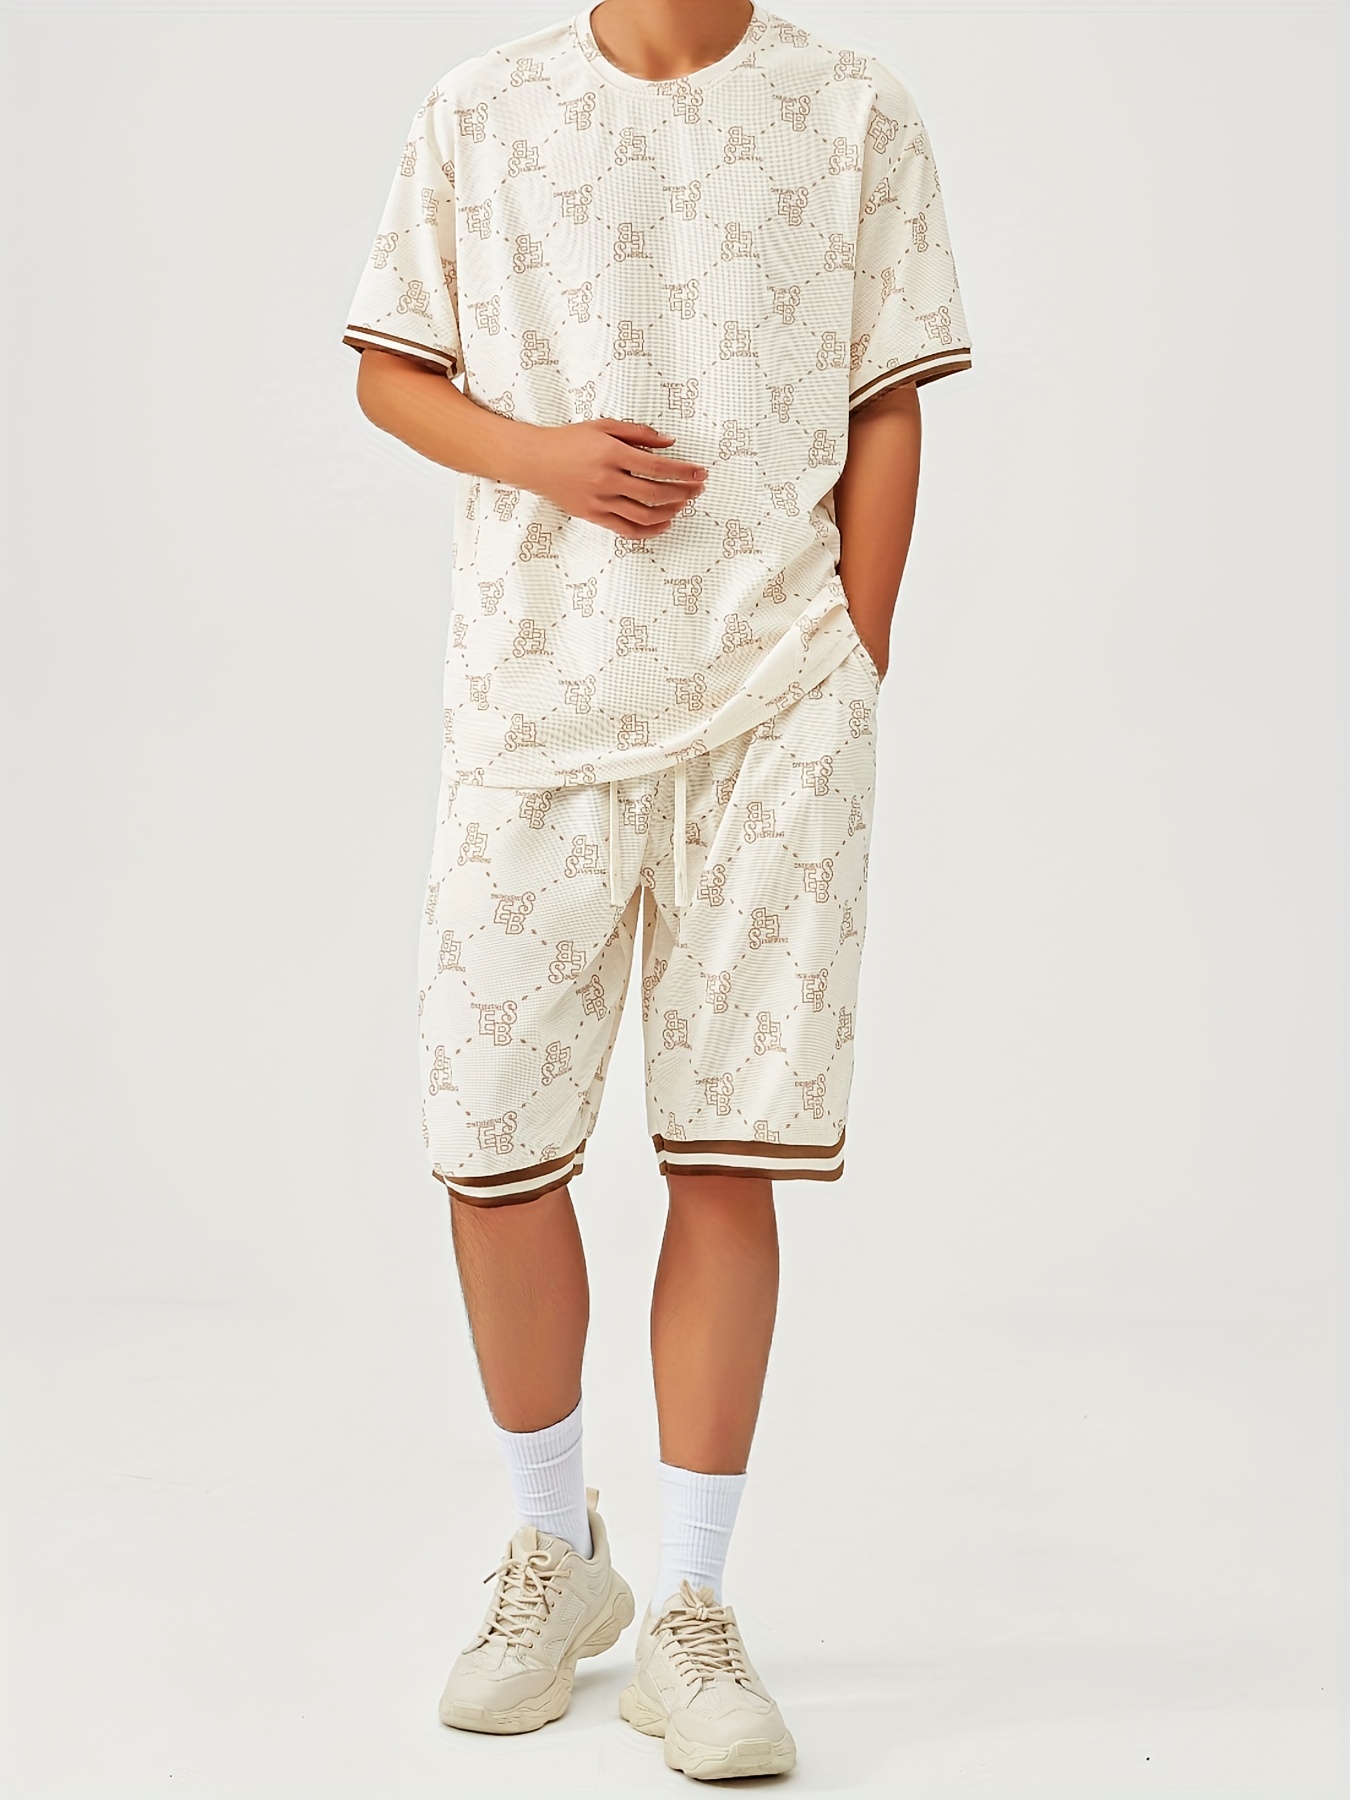 NEW Louis Vuitton Fashion Hoodies For Men-5, Replica Clothing  Louis  vuitton shirts, Mens casual outfits summer, Hoodie fashion